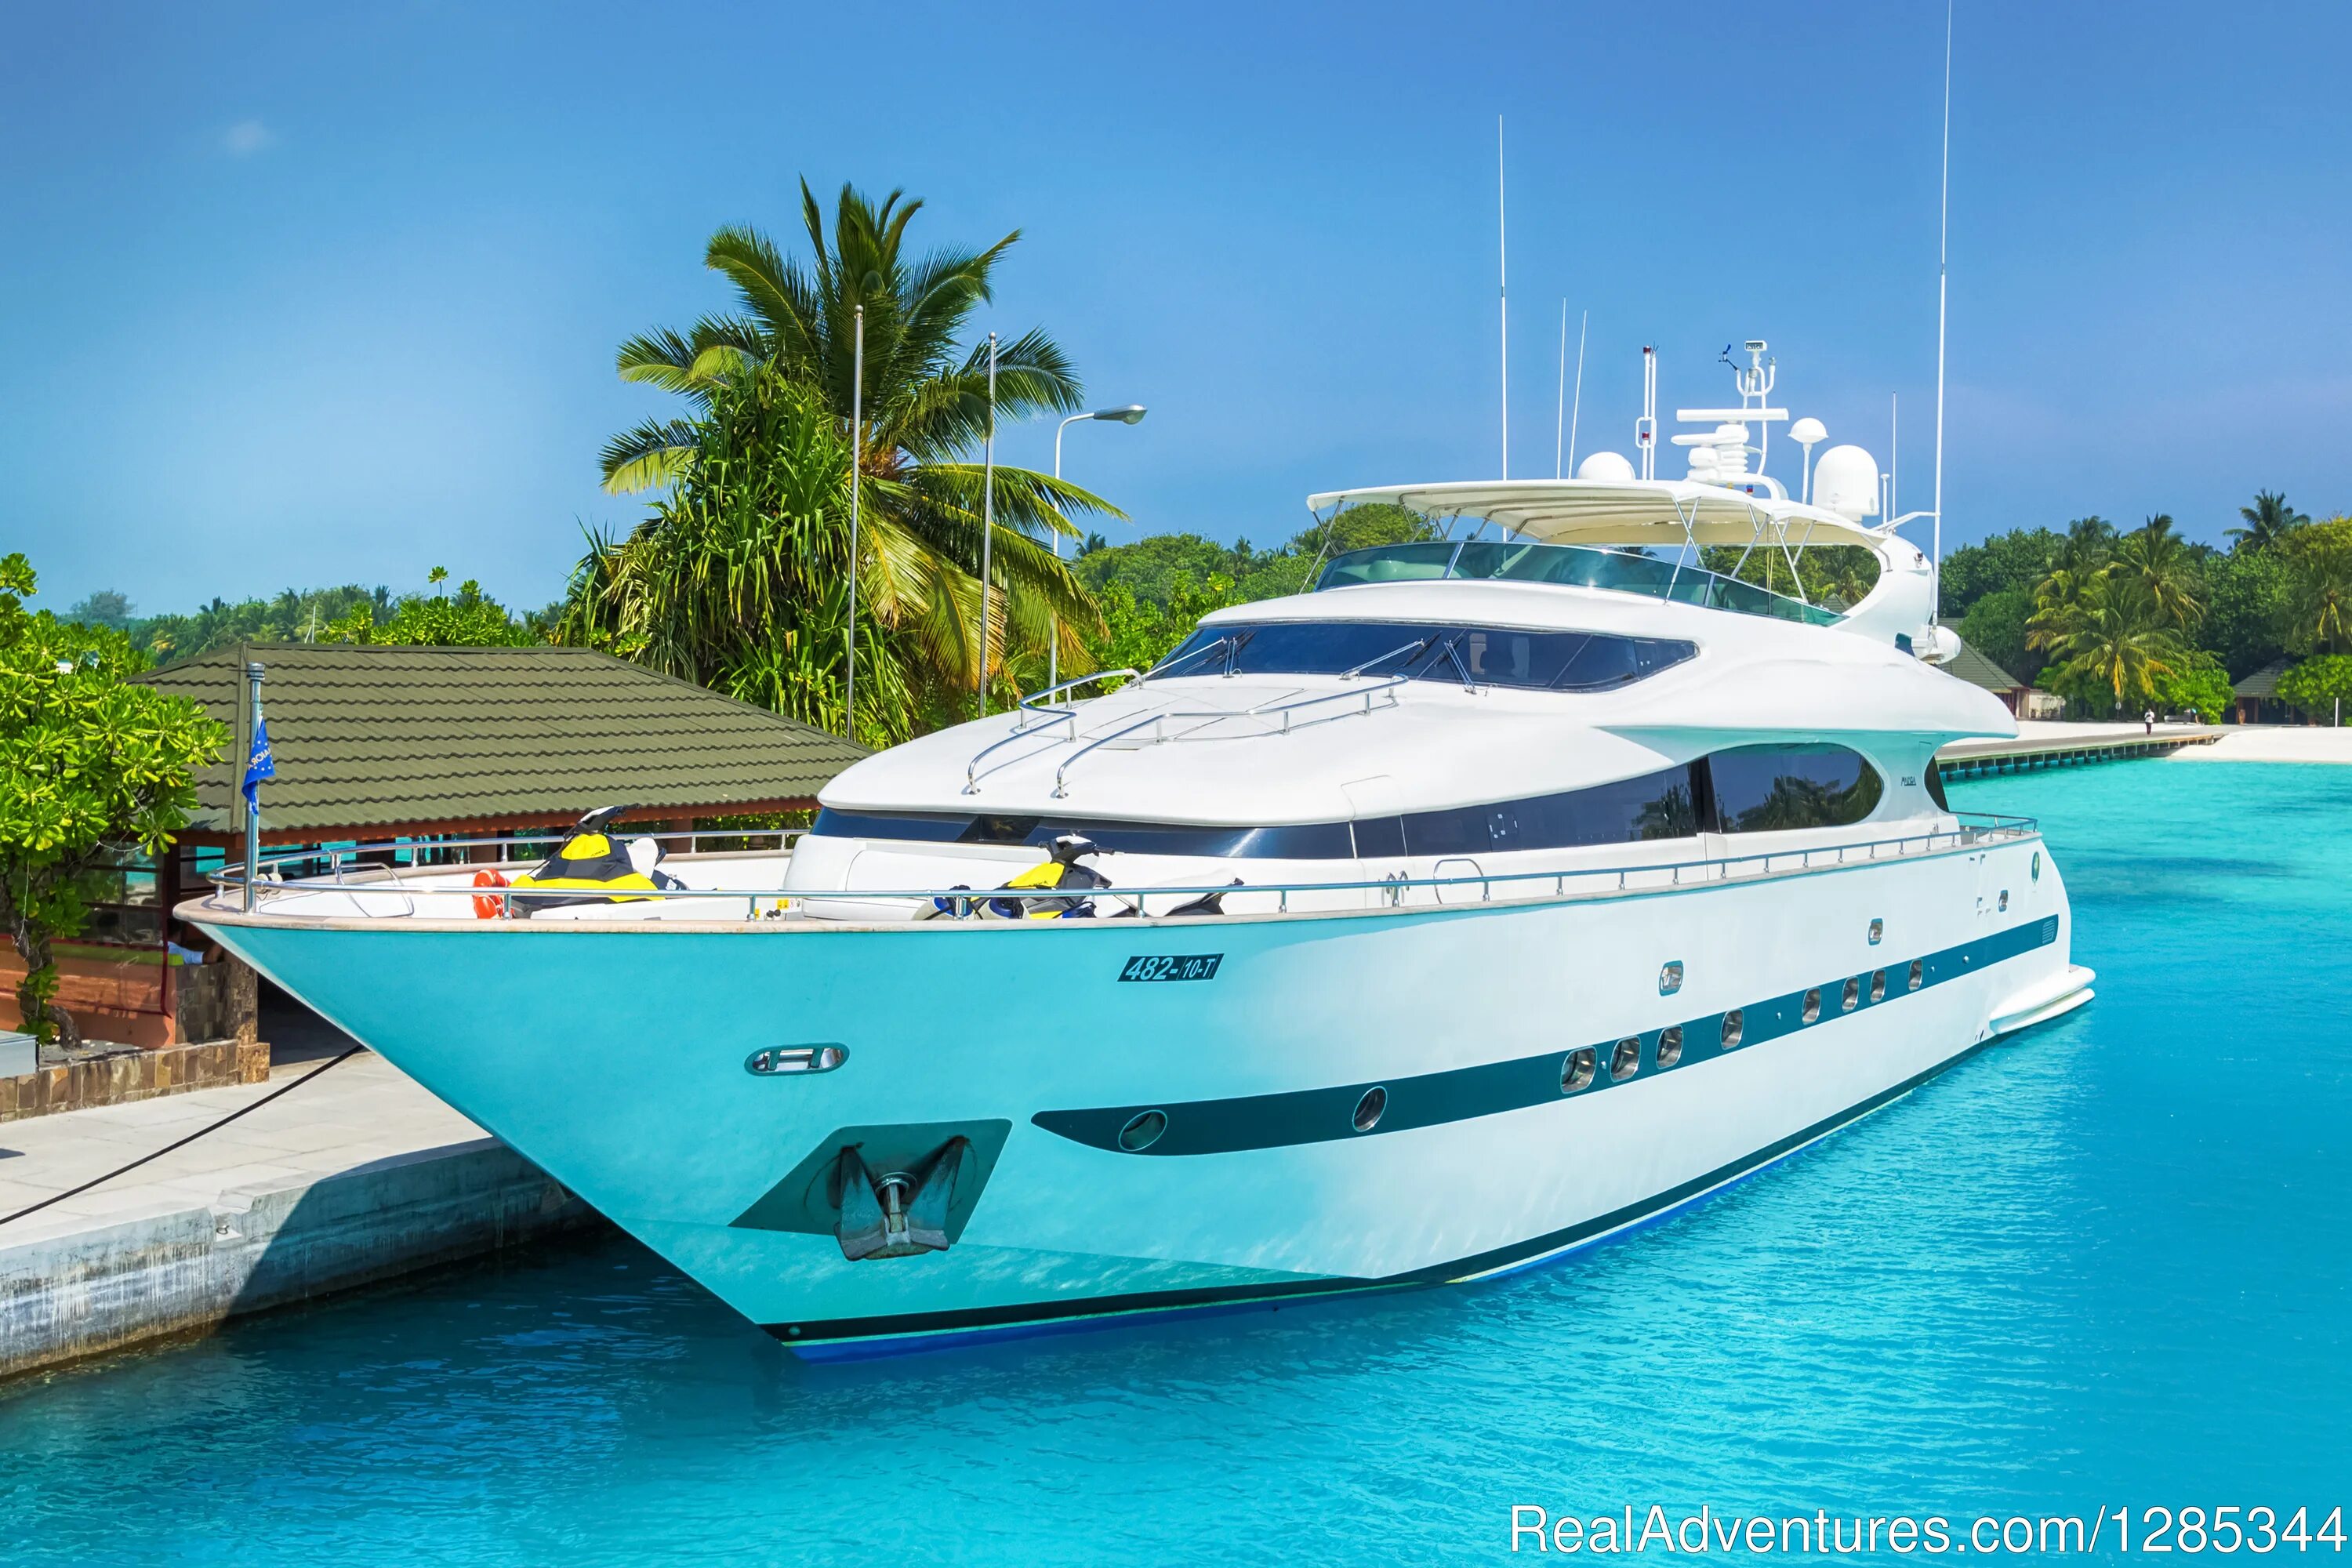 Seas 14. Яхта Ягуар. Морская яхта. Яхта на Мальдивах. Яхта богатство.